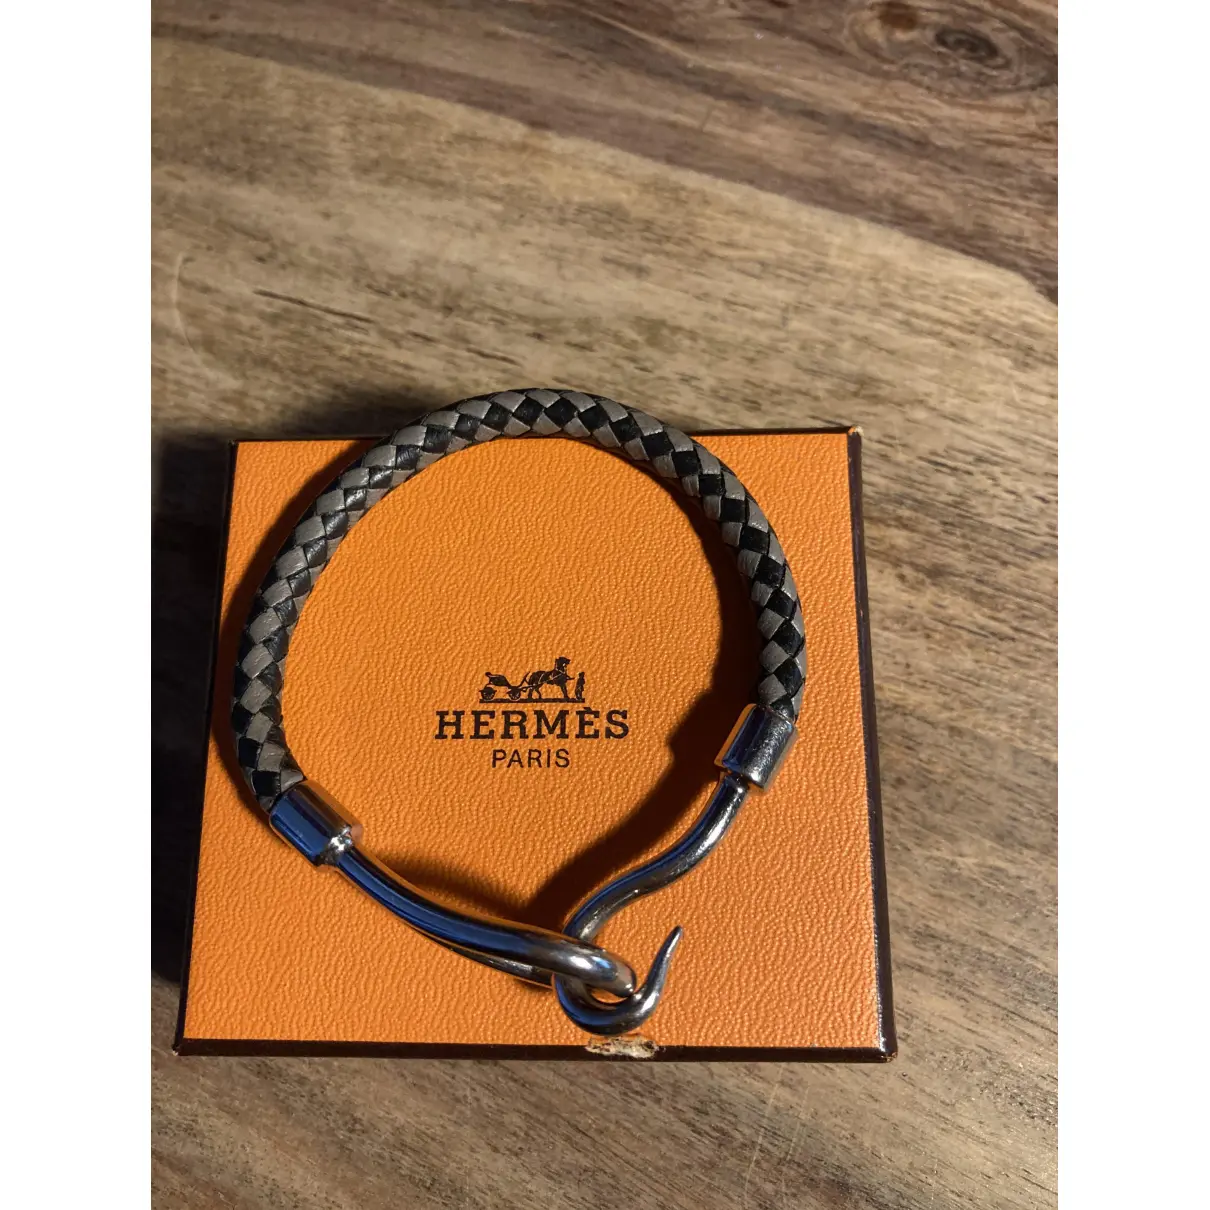 Buy Hermès Jumbo leather bracelet online